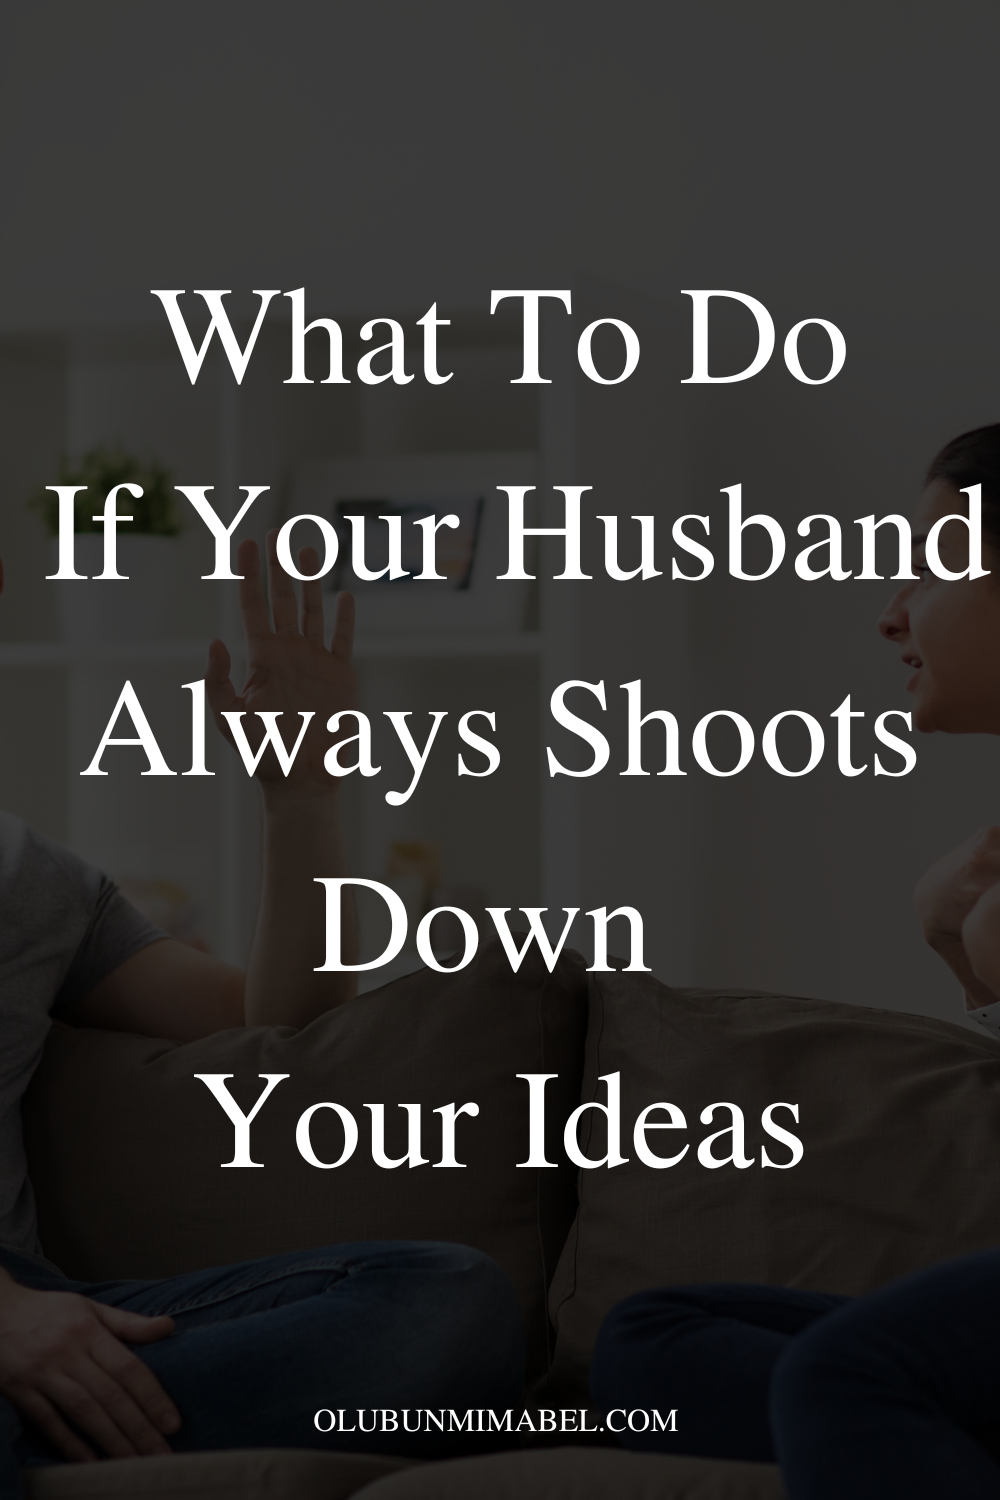 My Husband Always Shoots Down My Ideas